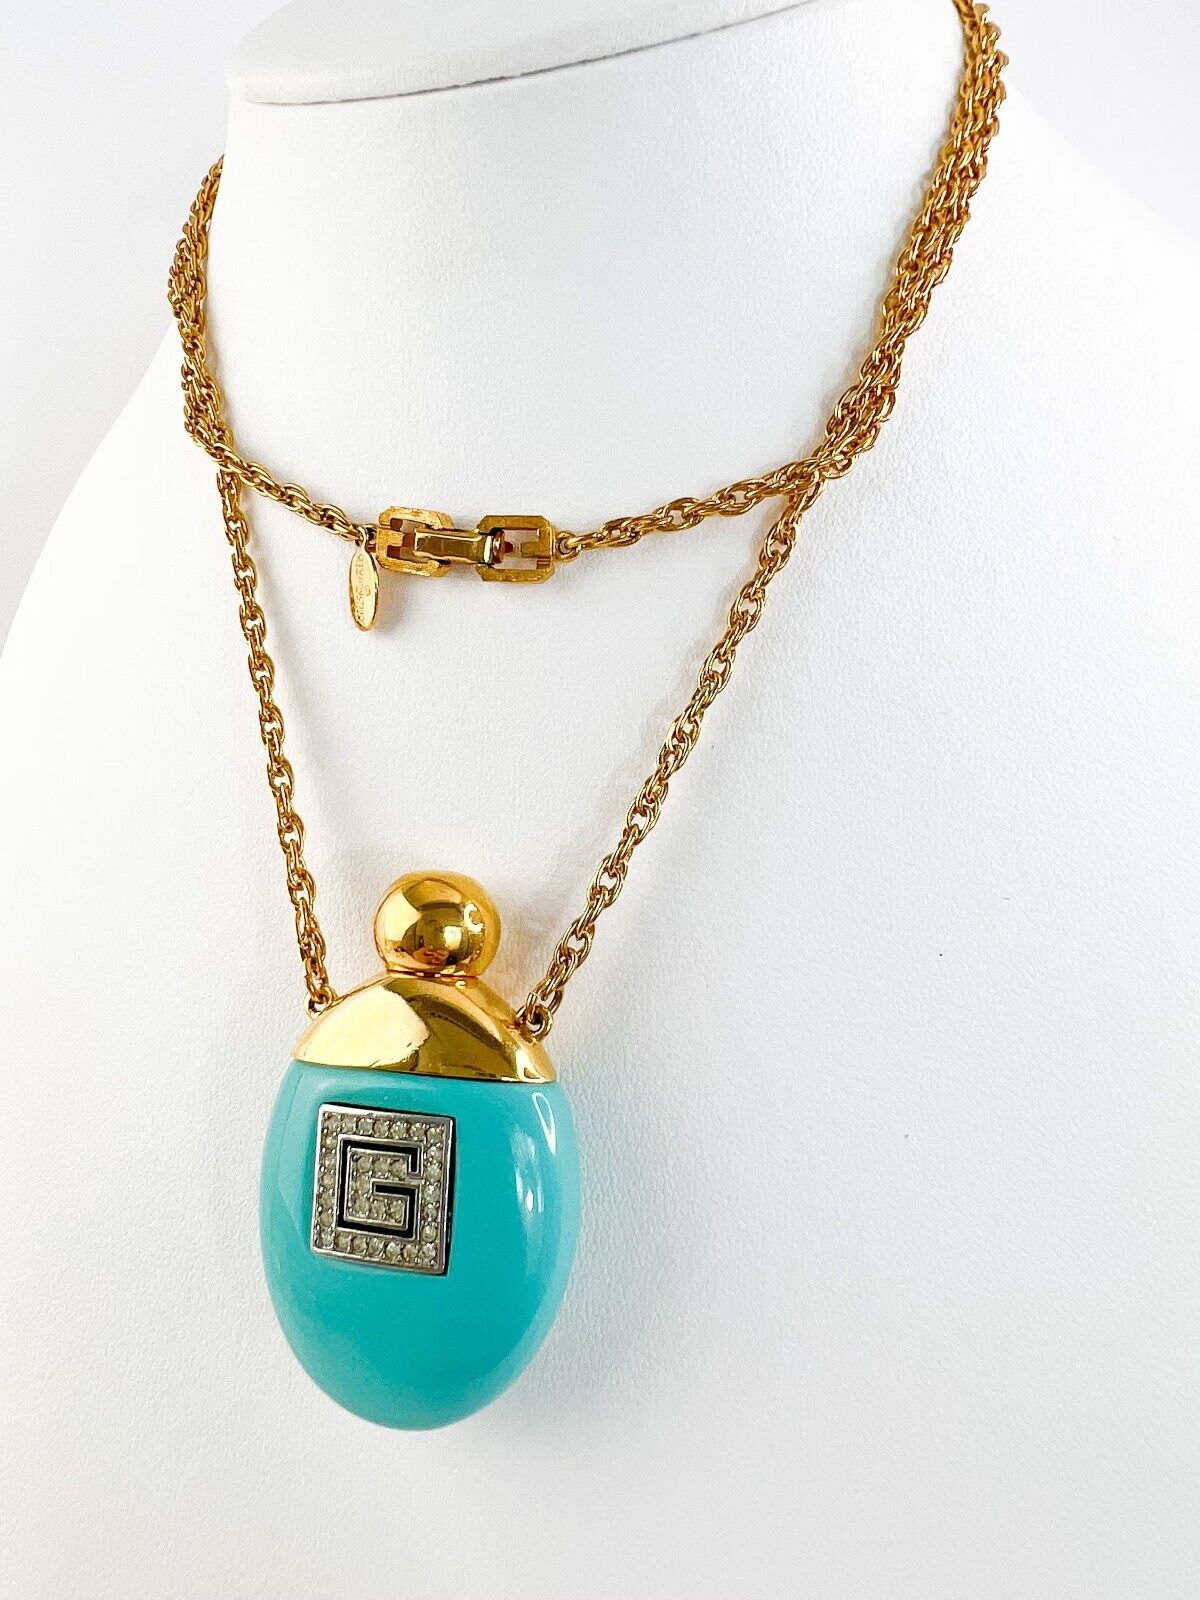 Vintage Givenchy Necklace, Necklace Gold, Necklace Large, Perfume Bottle Pendant, Givenchy Bottle Logo Necklace Blue, Personalized Gifts